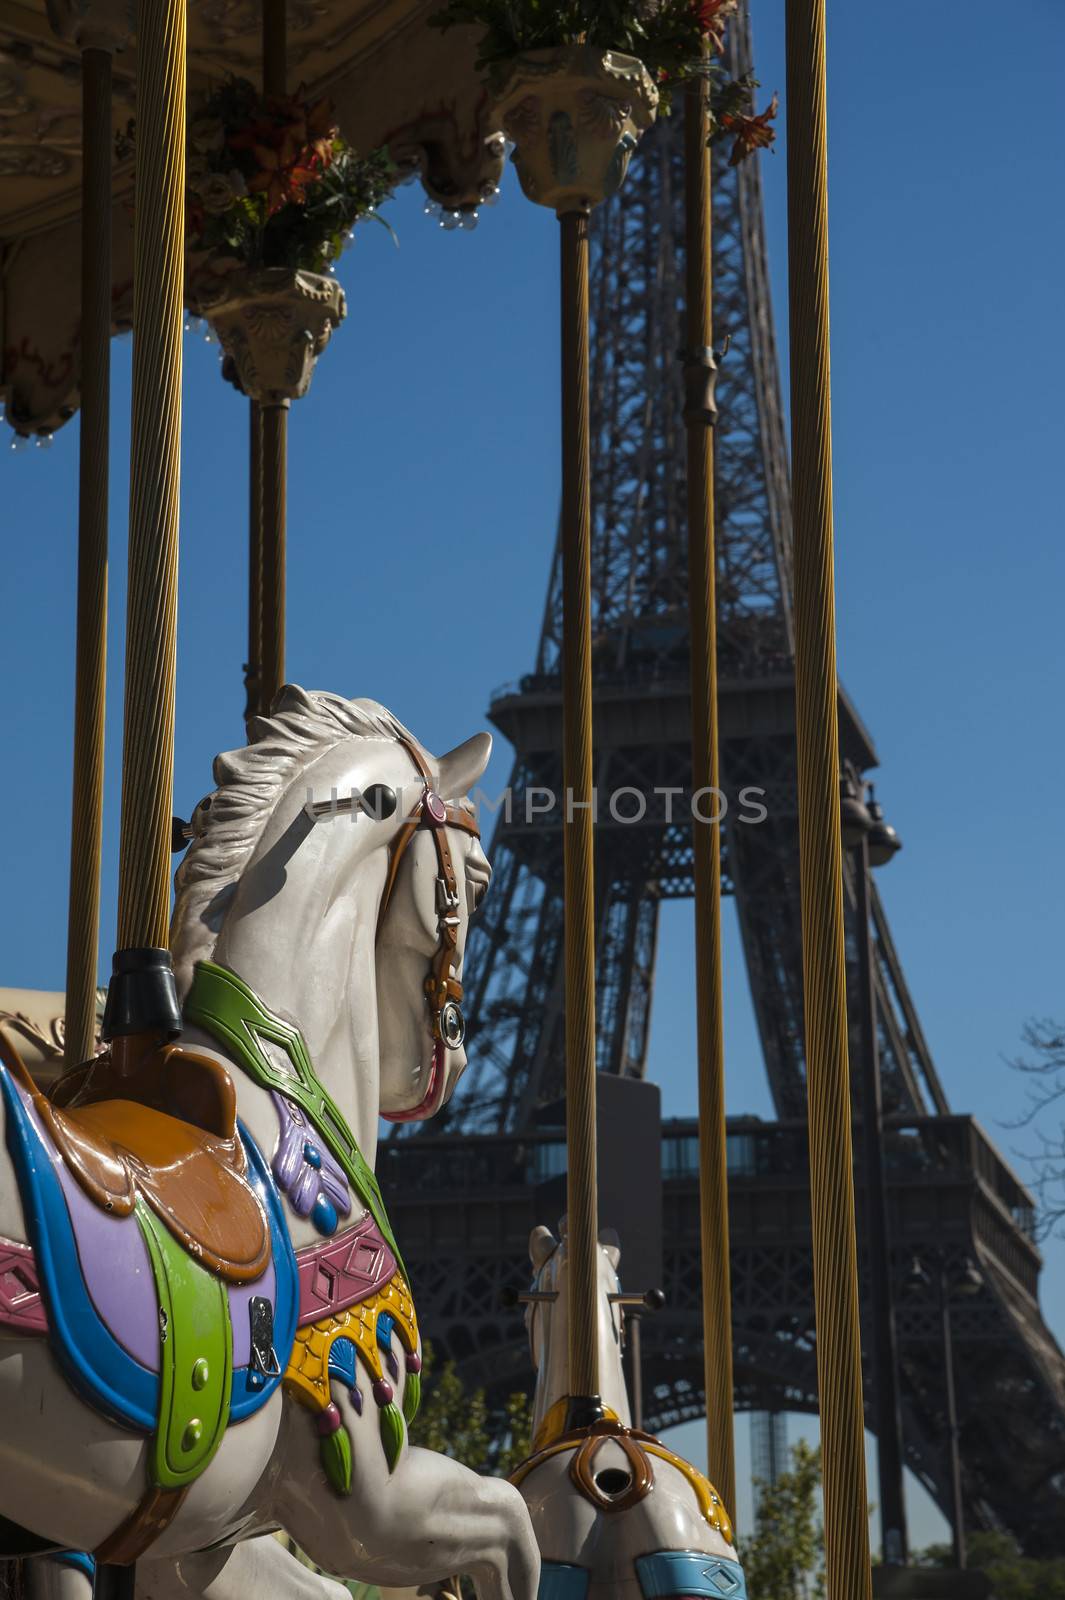 Carousel in Paris by cla78